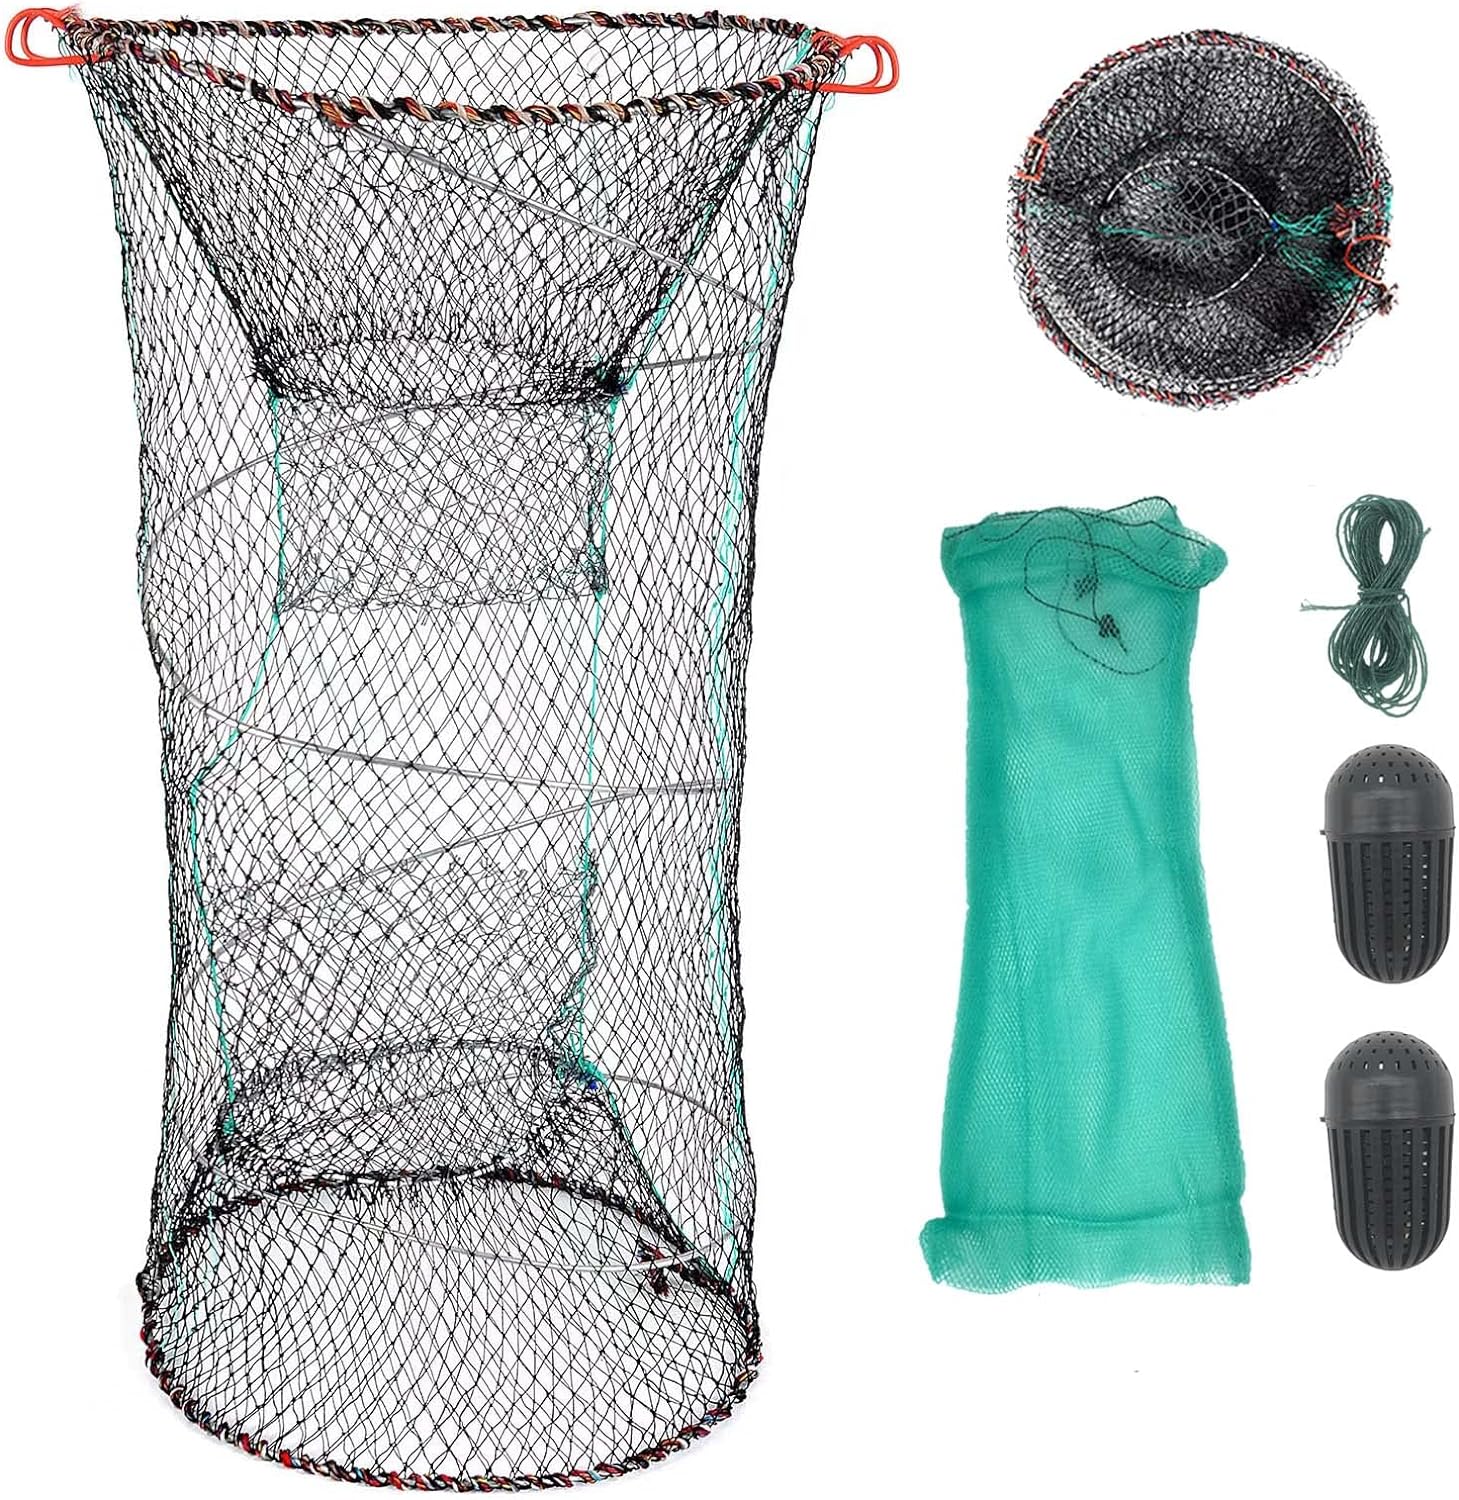 Perch Trap, Cast & Hoop Nets, Bait, Crab or Crawfish Trap